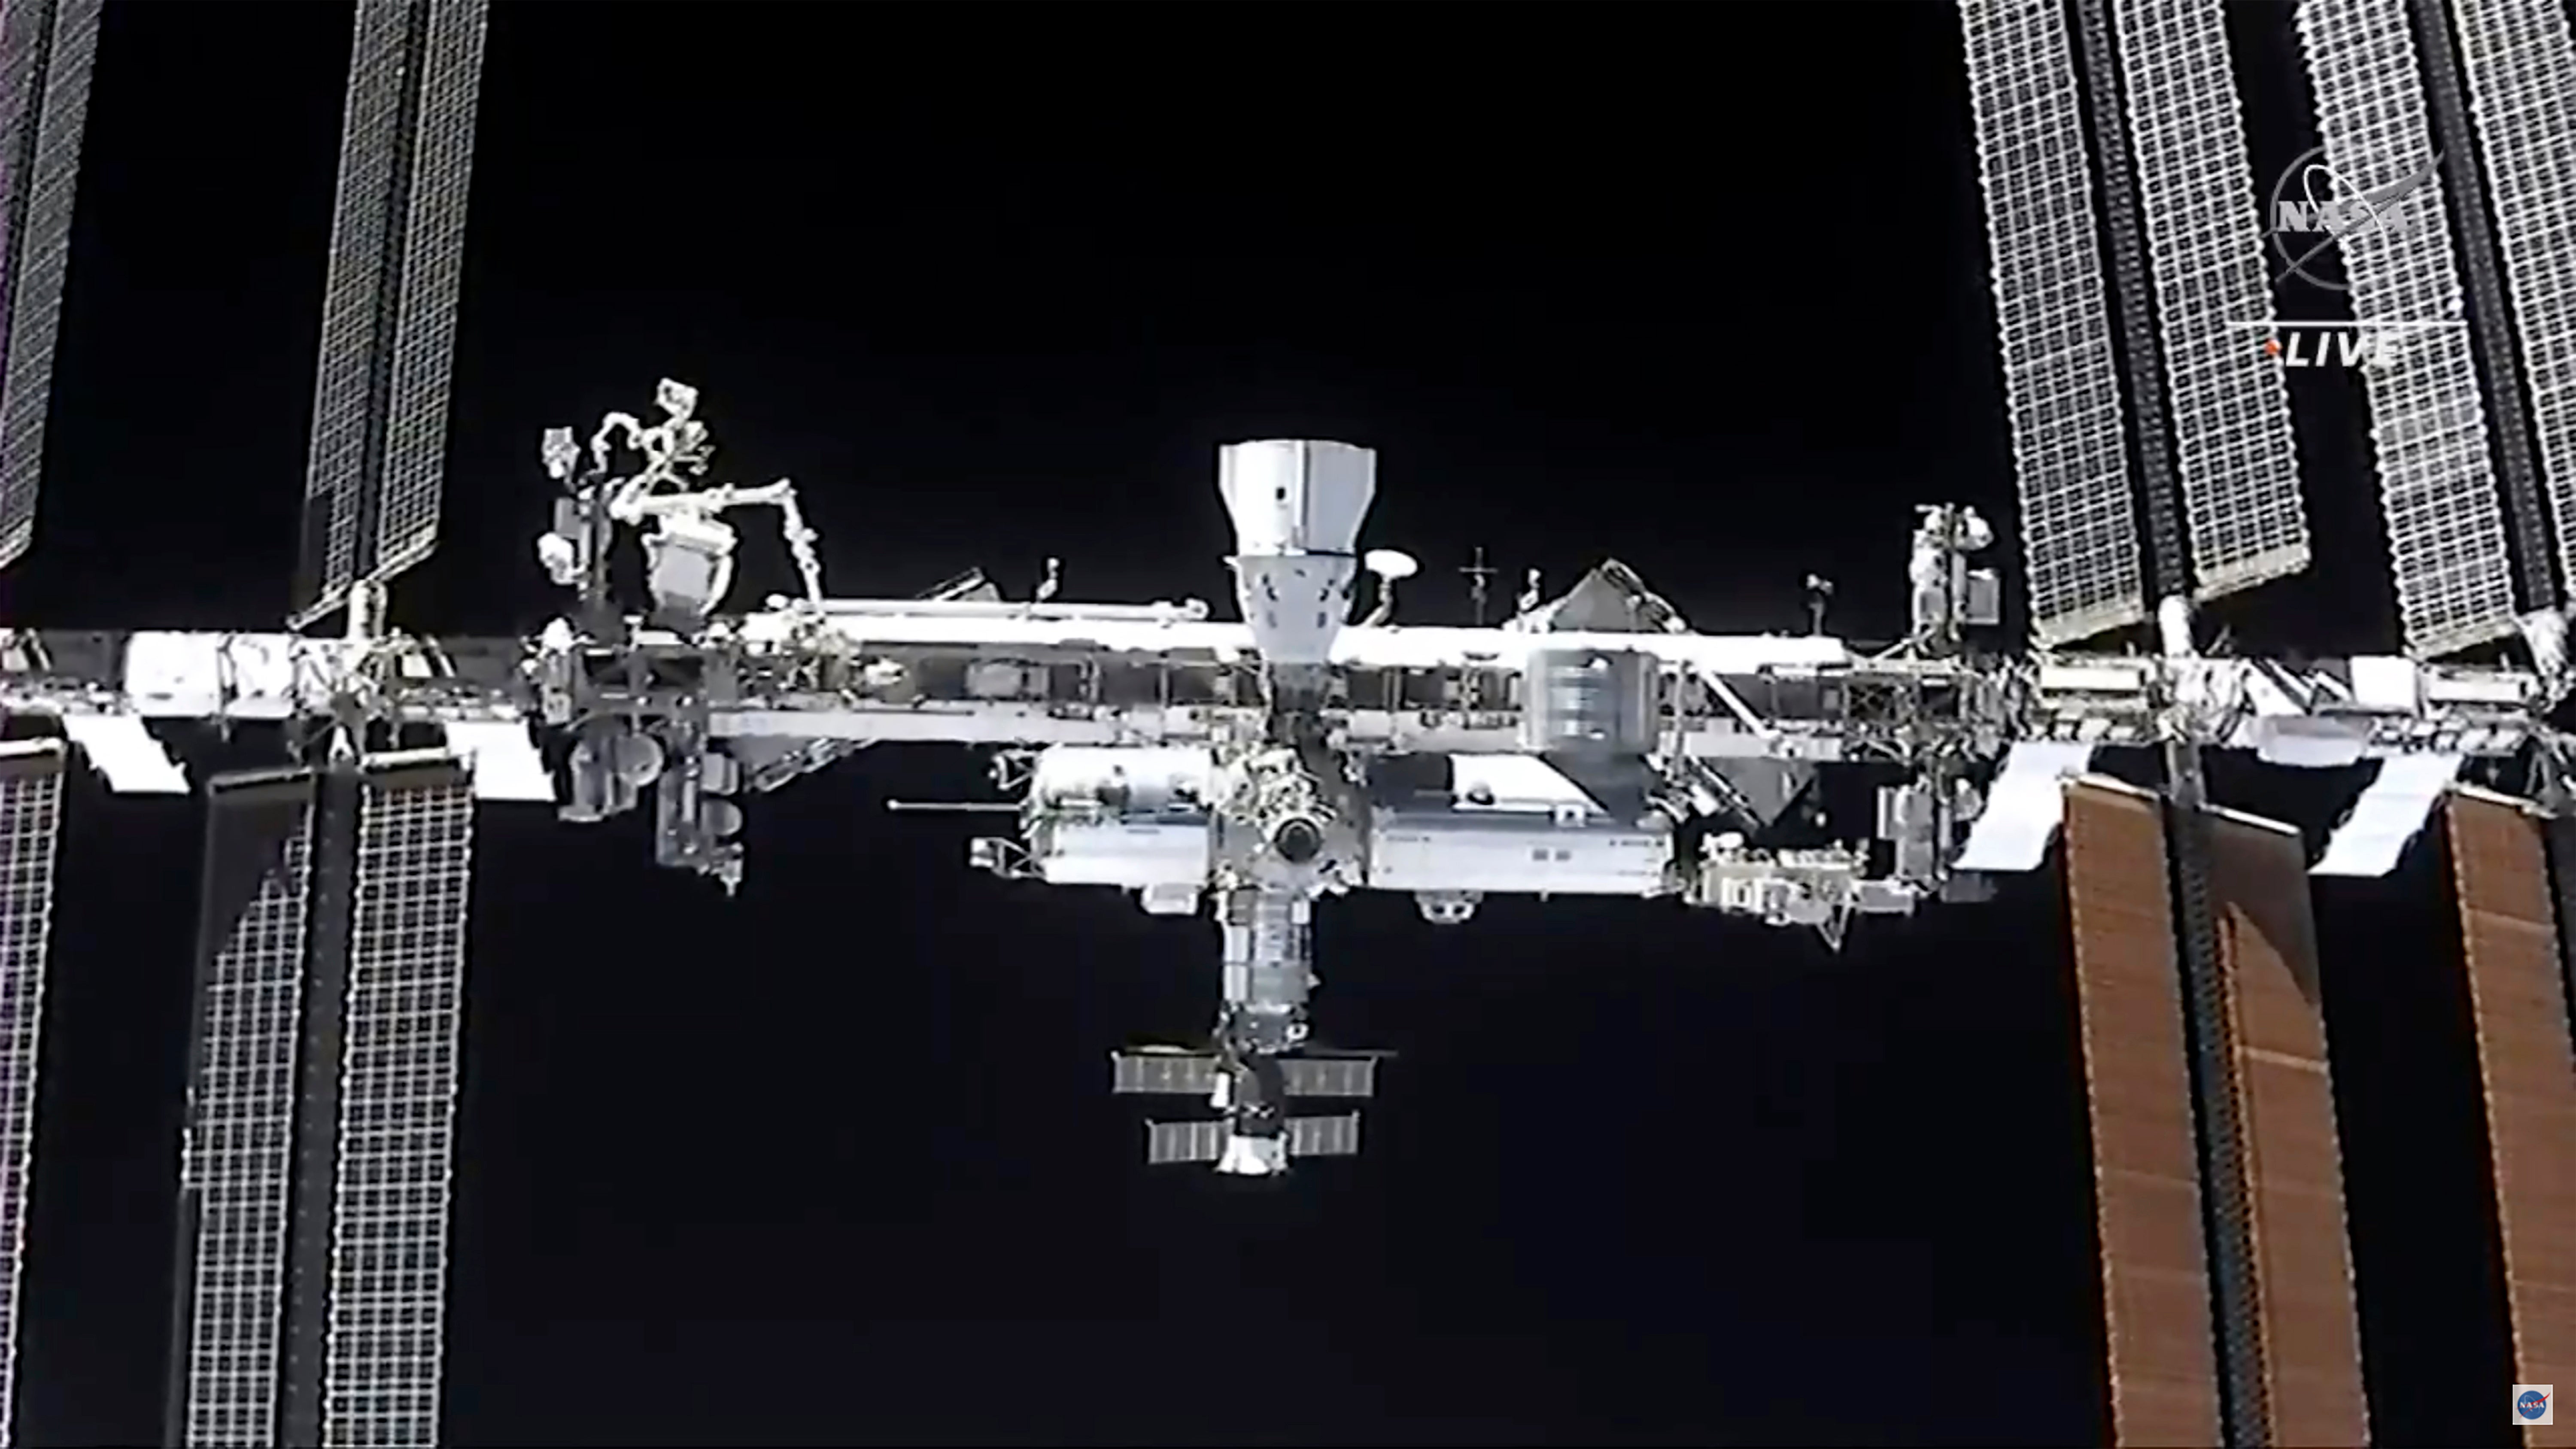 Условия на мкс. МКС станция Космическая 2021. Dragon SPACEX пристыковался к МКС. Крю драгон пристыковался к МКС. Crew Dragon пристыкованный к МКС.